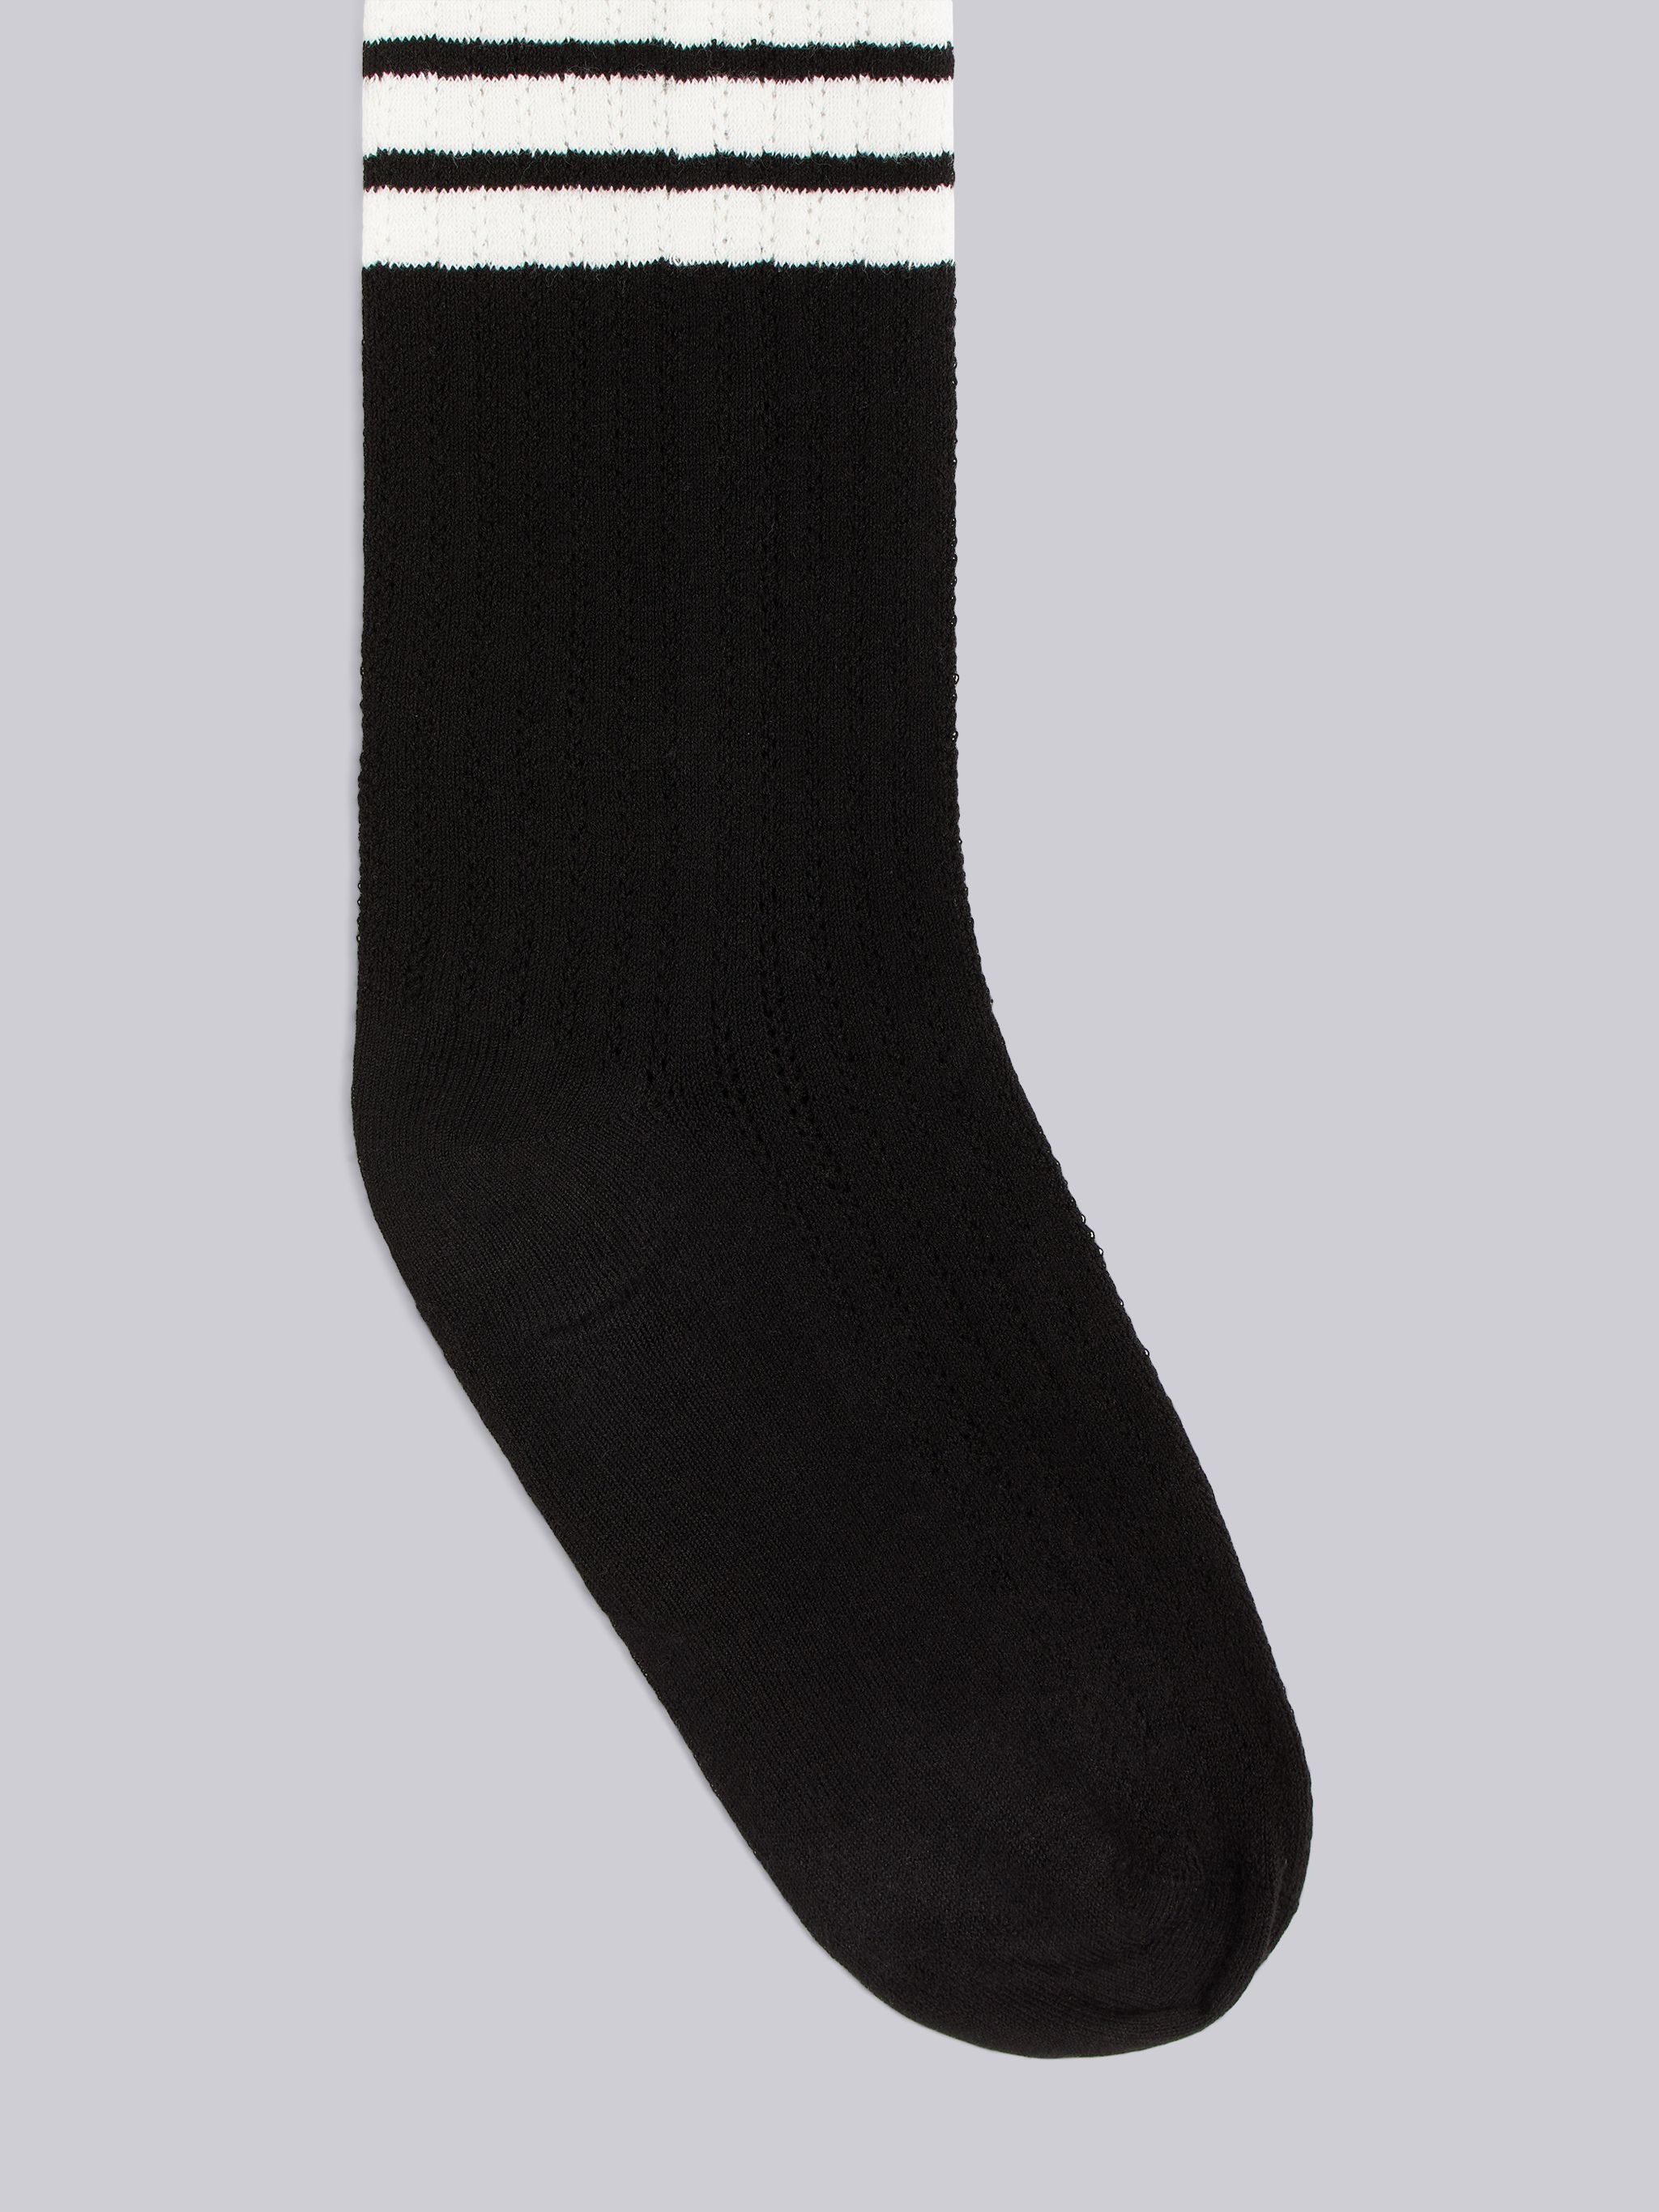 Black Cotton Lace 4-Bar Mid-calf Socks - 2